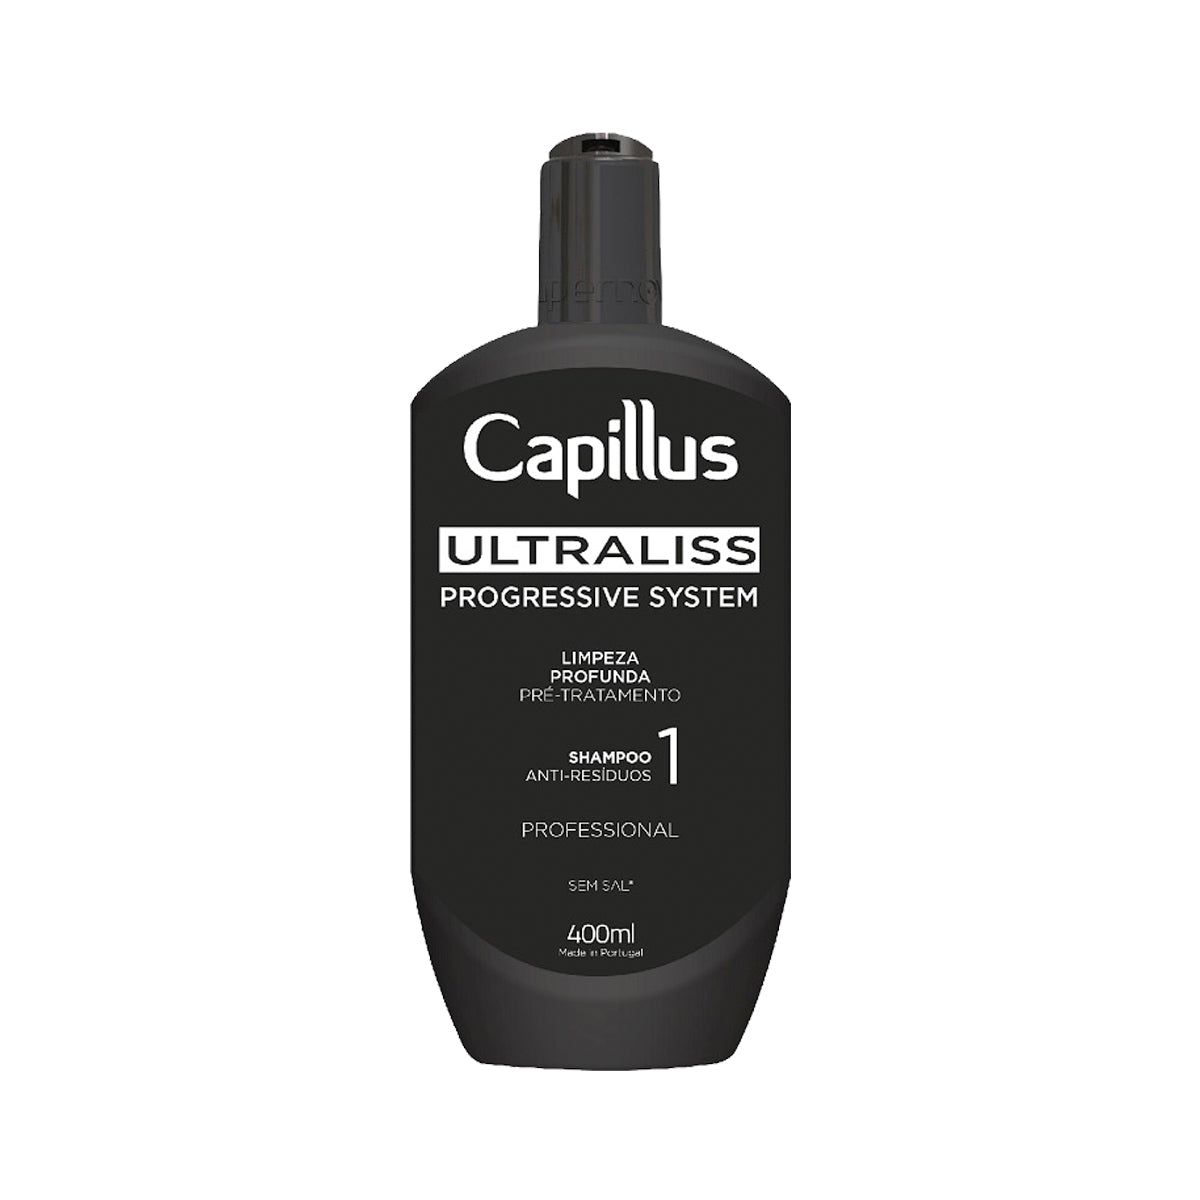 Capillus Ultraliss Nanoplastia, set for the nanoplasty treatment, 3x400ml